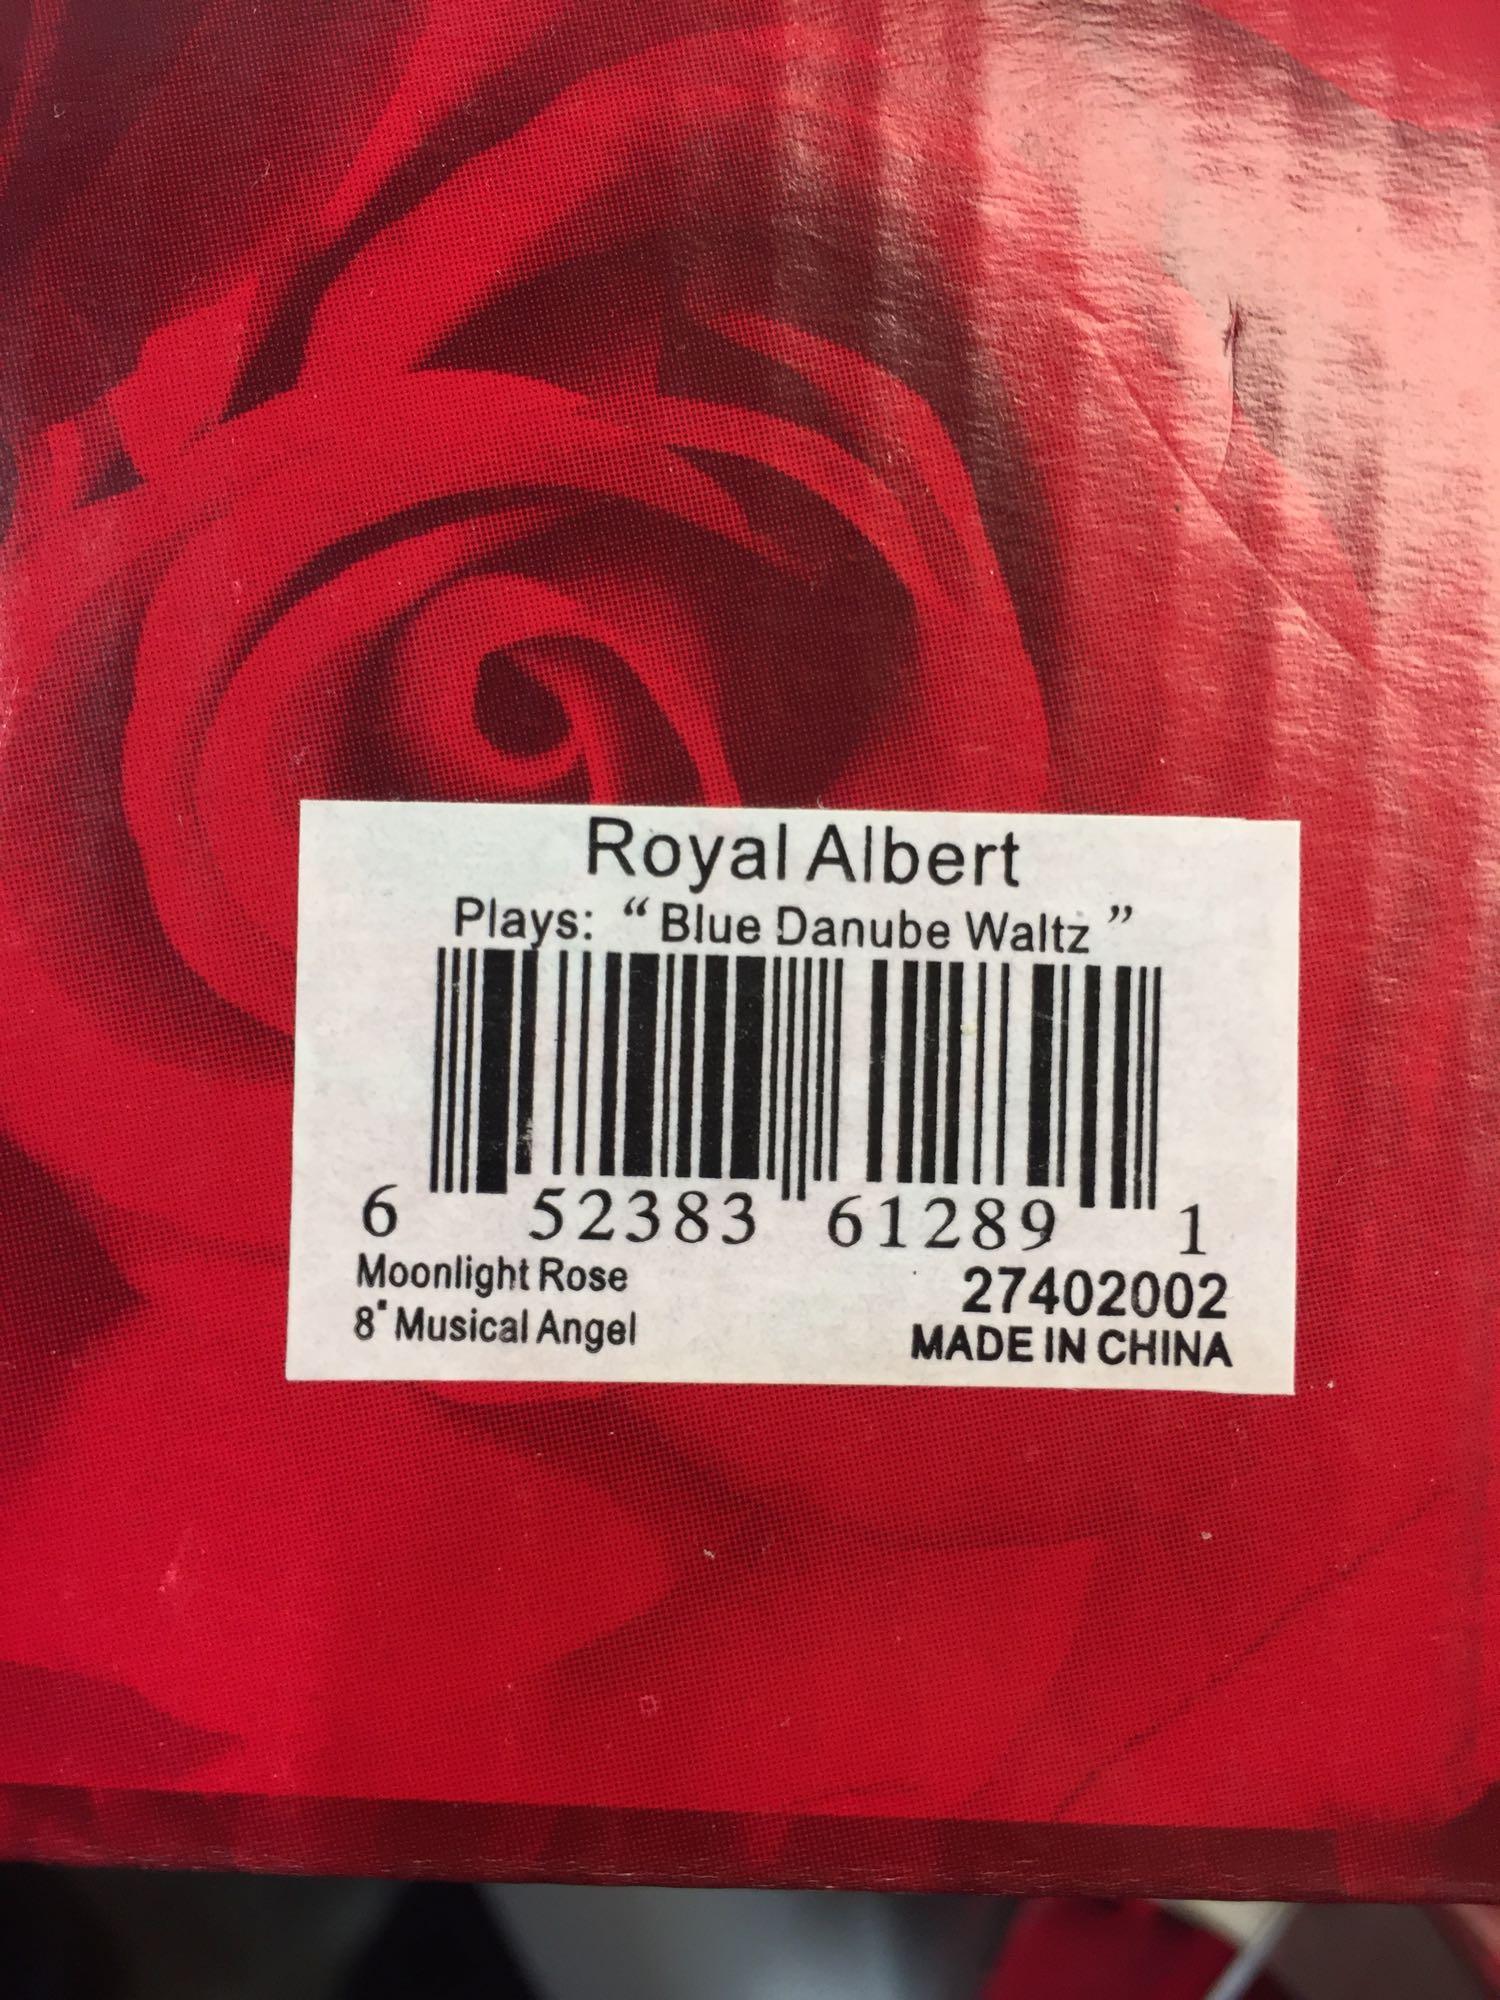 Lot of 10 boxes of Royal Albert Cina